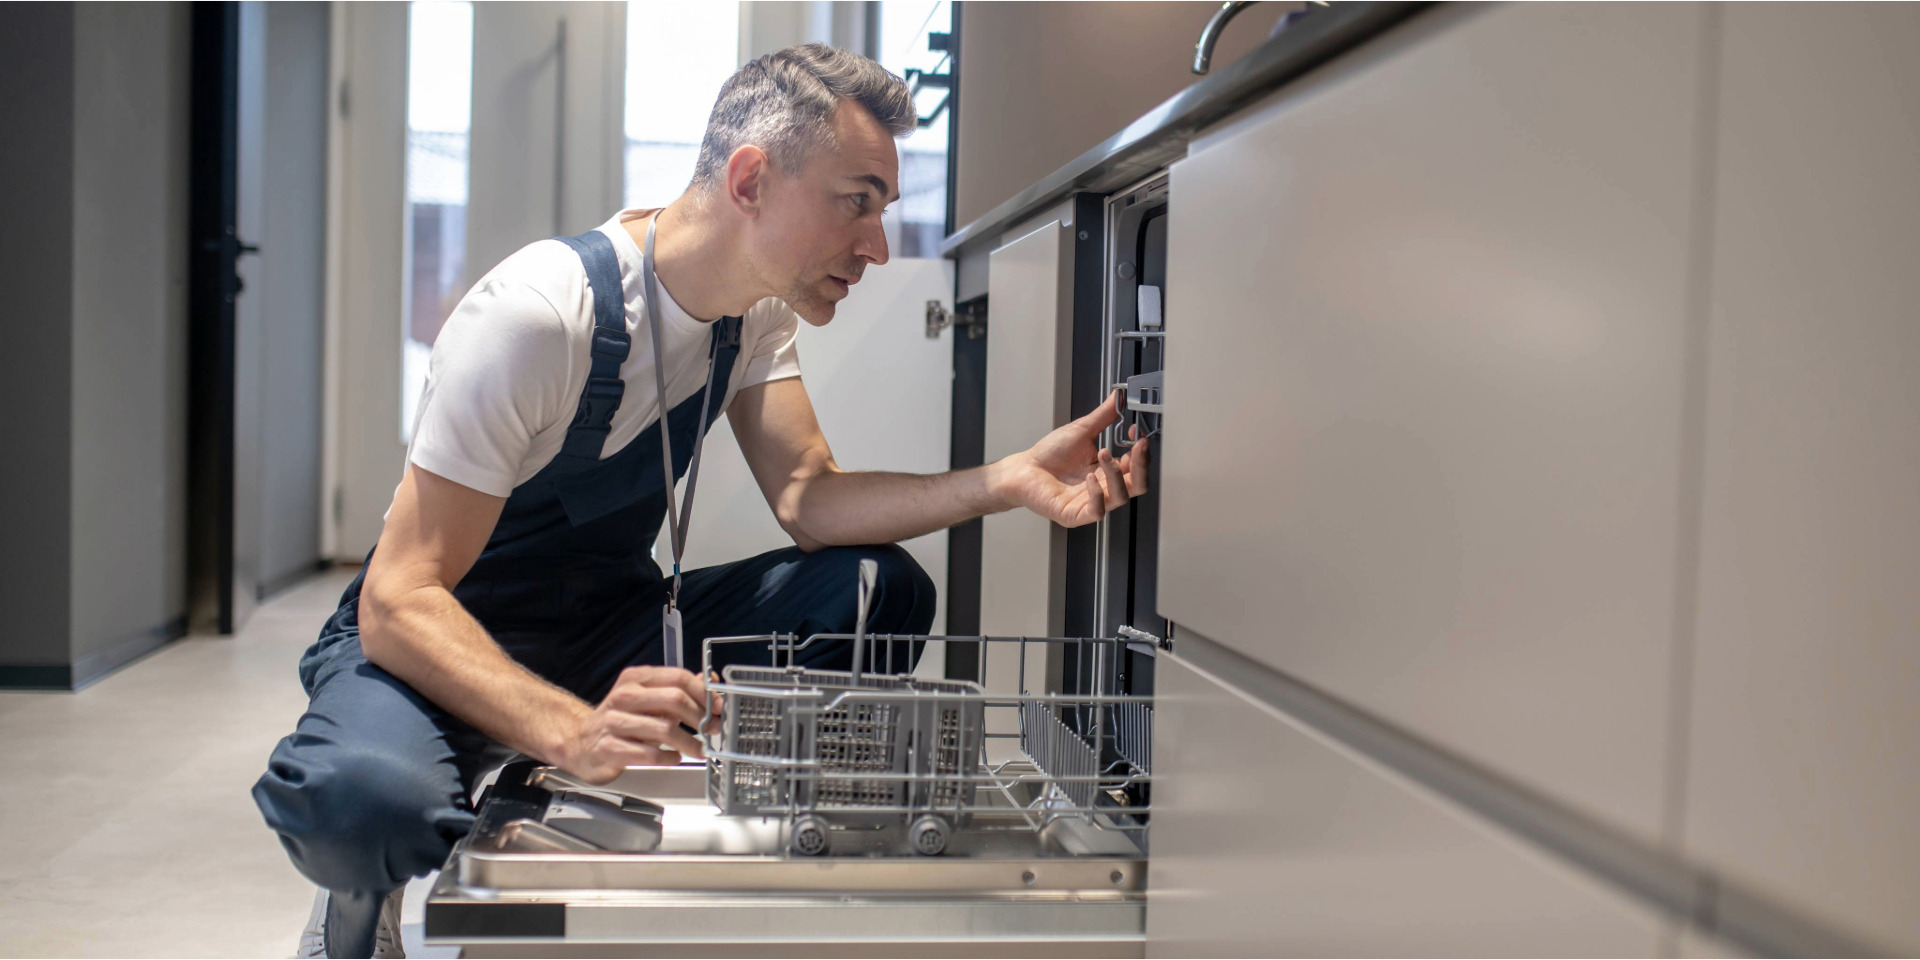 ManageLife's comprehensive dishwasher inspection services